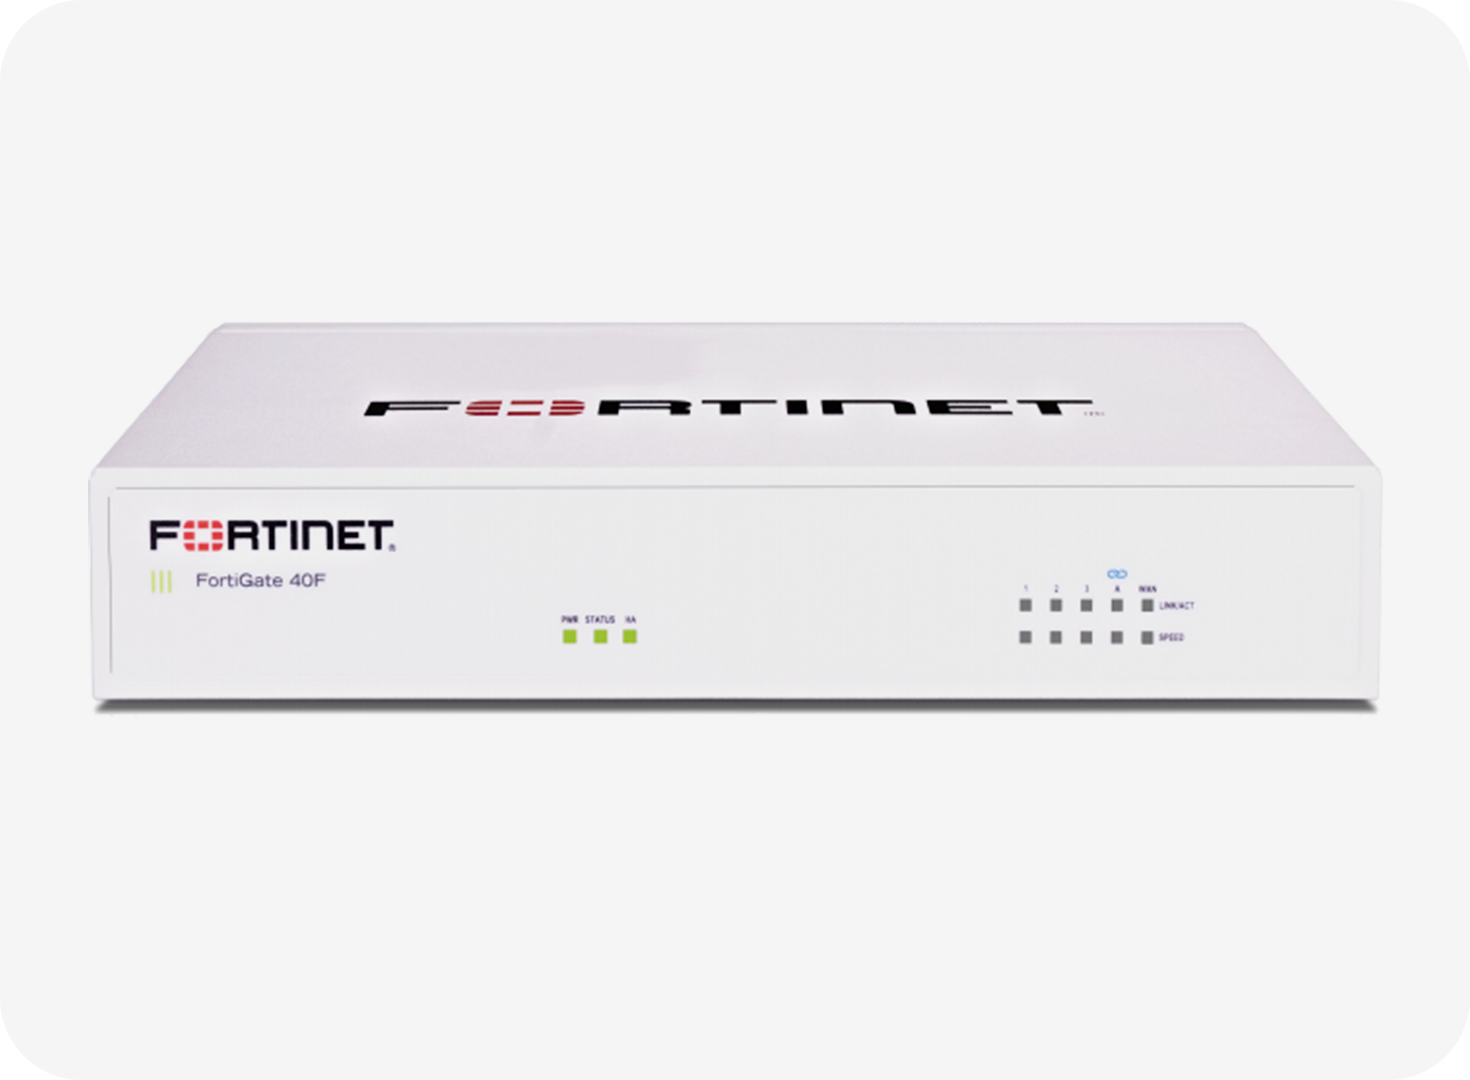 Buy FortiGate 40F Firewall at Best Price in Dubai, Abu Dhabi, UAE